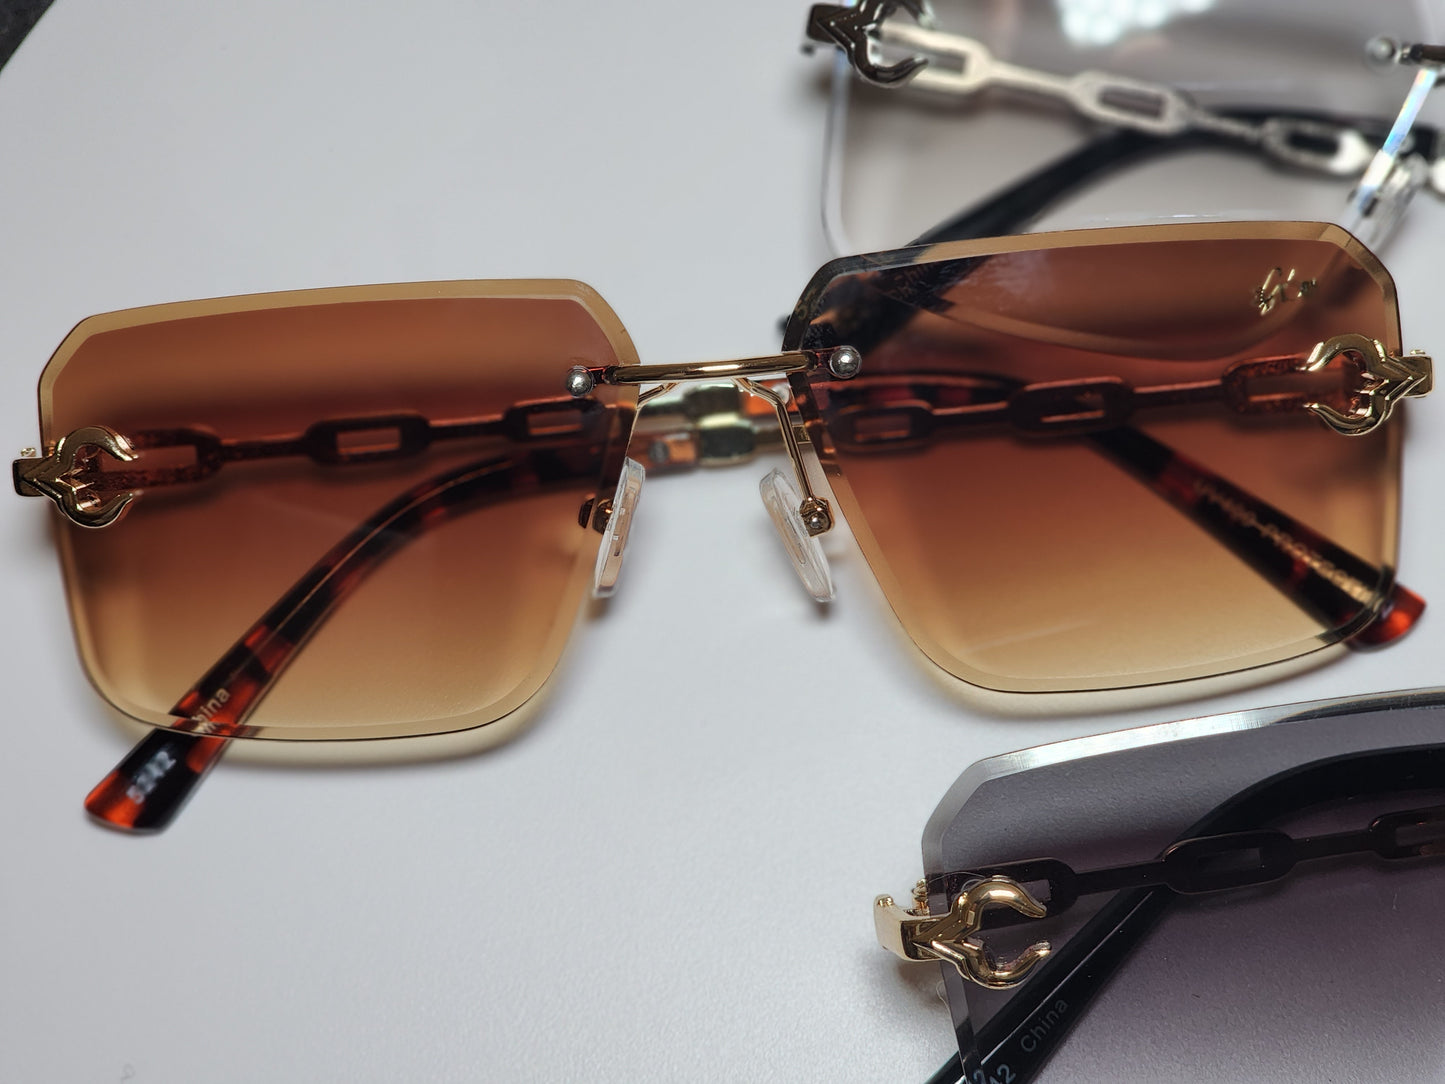 "Scorpion Sunglasses"